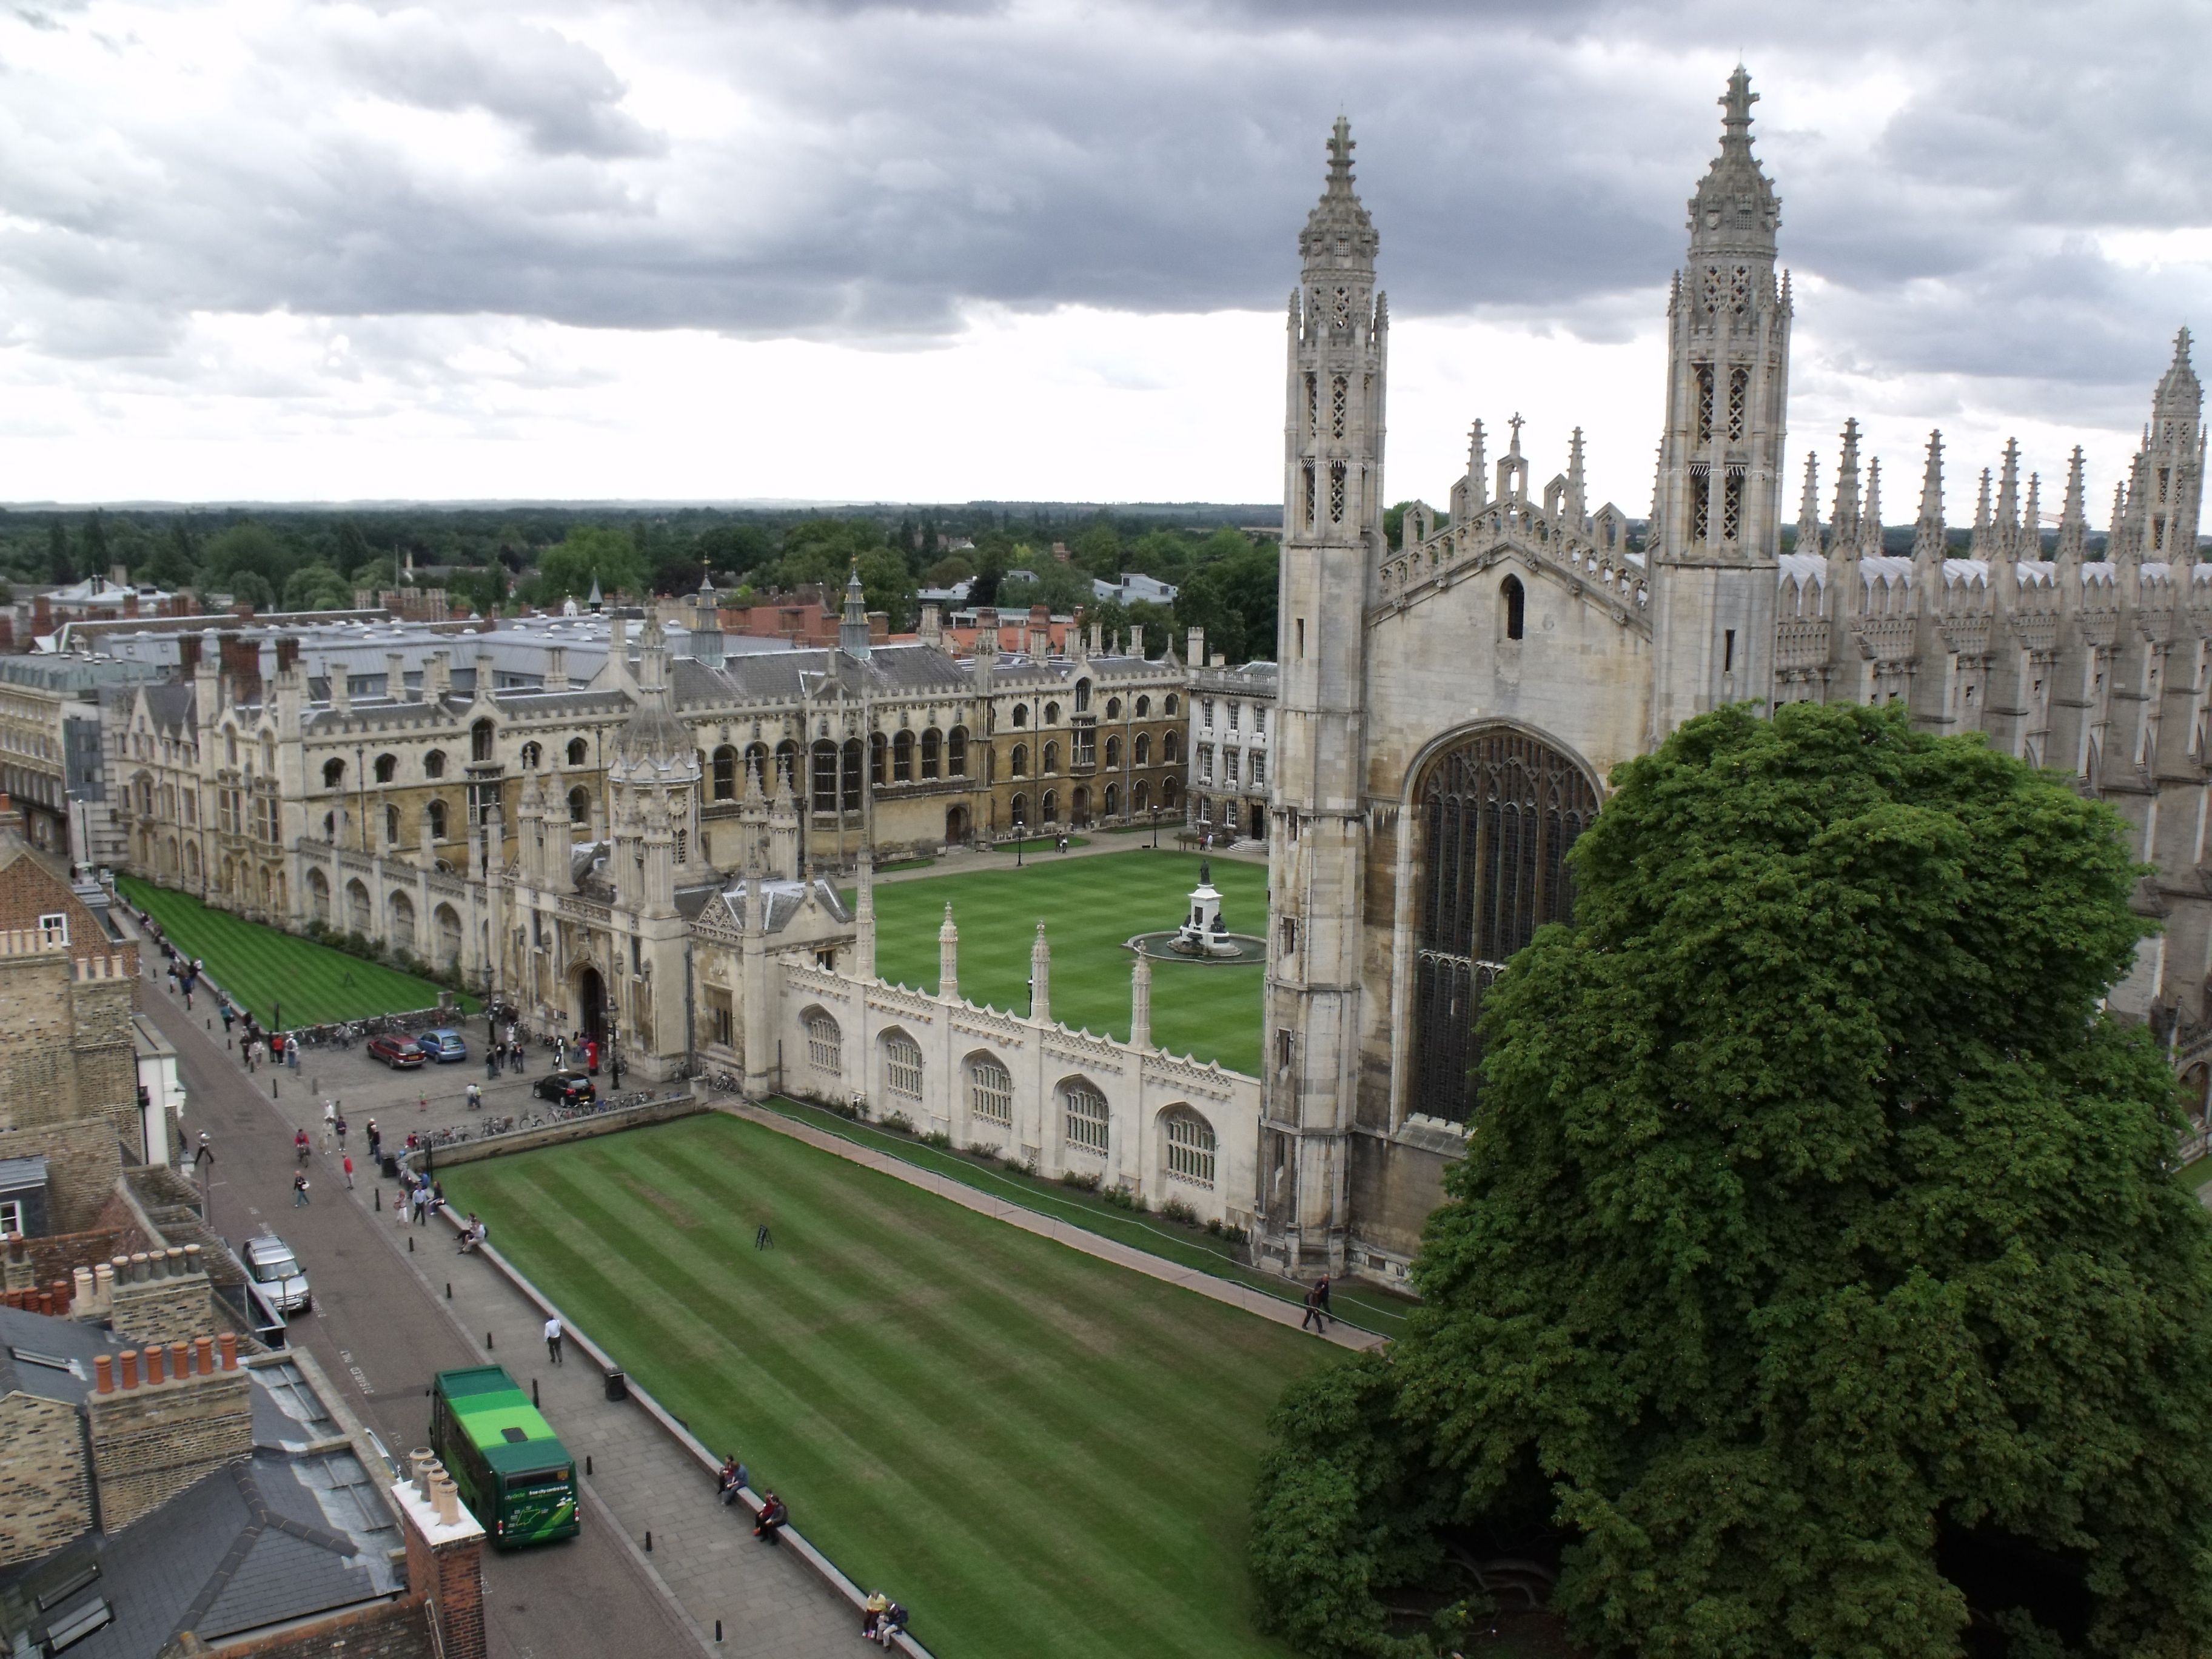 Free Activities this week at EC Cambridge Cambridge Blog